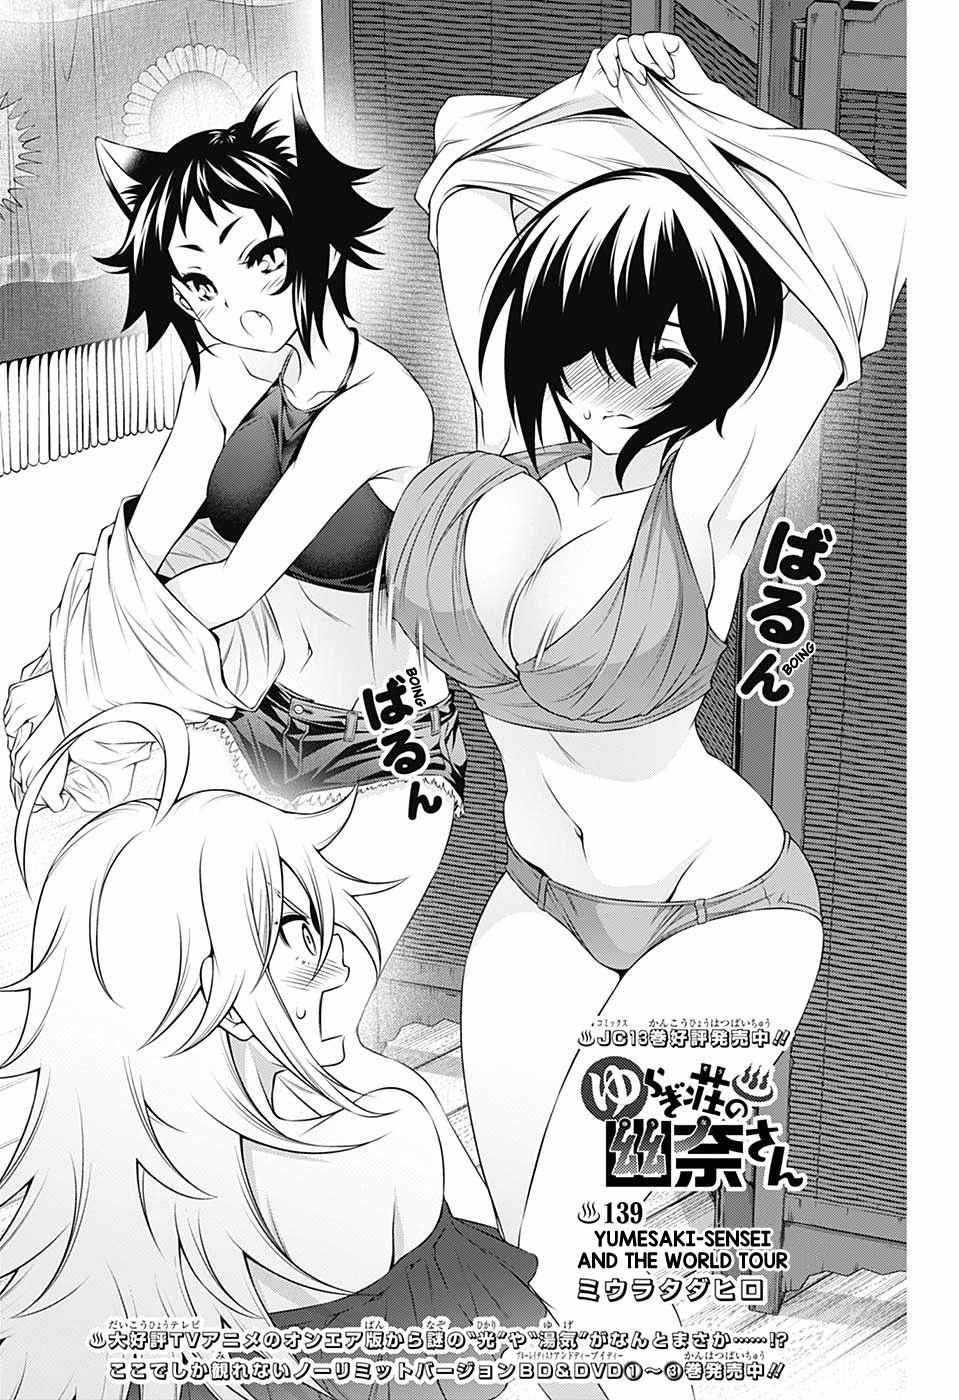 Read Yuragi-Sou No Yuuna-San Chapter 100 on Mangakakalot